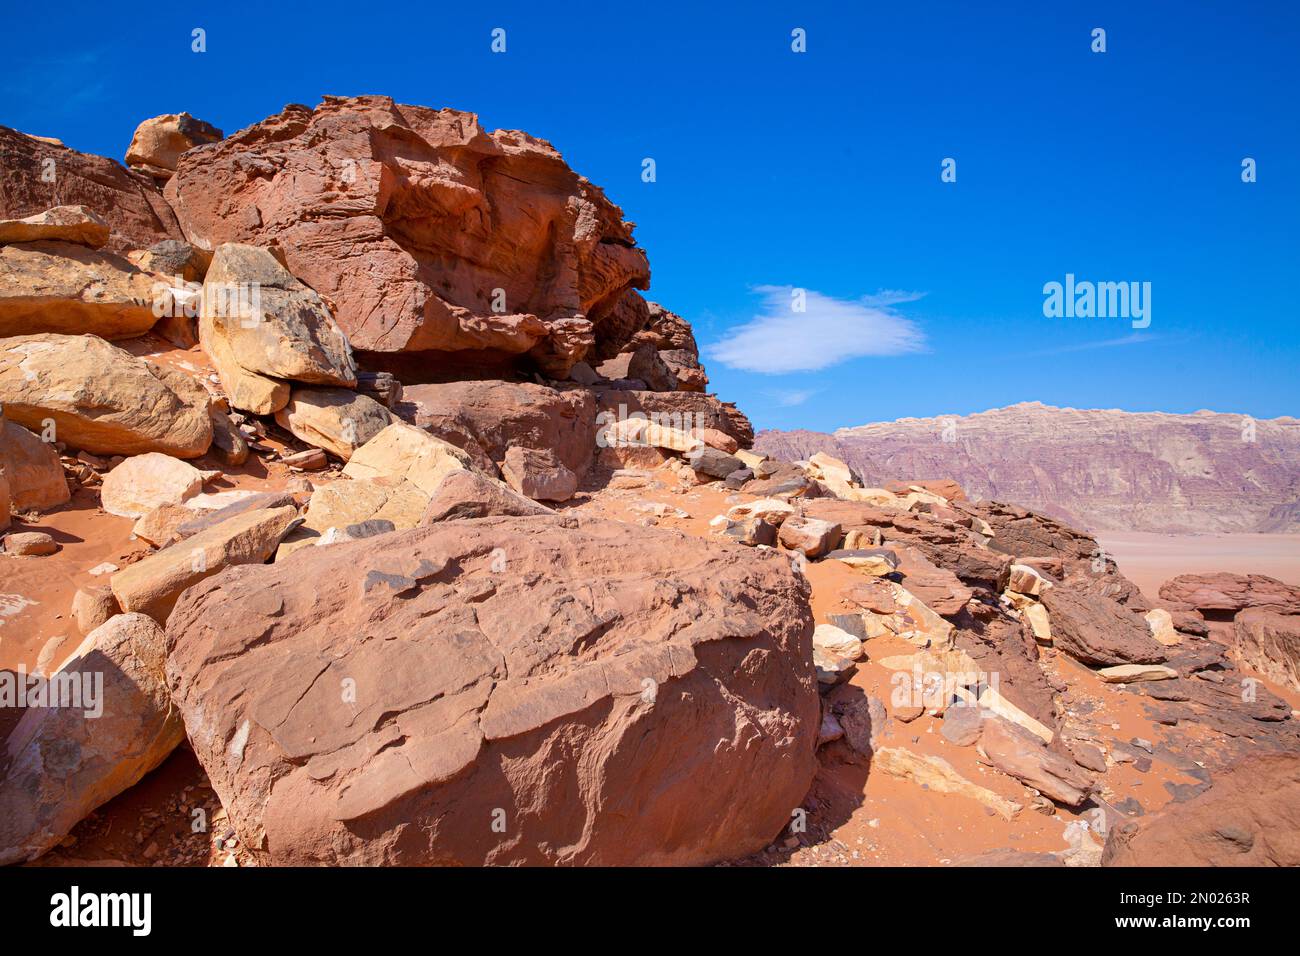 Wadi Rum desert in Jordan. Beautiful rocky mountains landscape and blue sky. Stock Photo